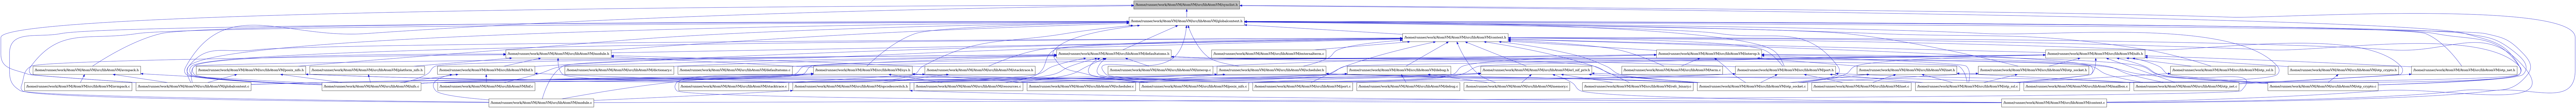 digraph {
    graph [bgcolor="#00000000"]
    node [shape=rectangle style=filled fillcolor="#FFFFFF" font=Helvetica padding=2]
    edge [color="#1414CE"]
    "10" [label="/home/runner/work/AtomVM/AtomVM/src/libAtomVM/bif.c" tooltip="/home/runner/work/AtomVM/AtomVM/src/libAtomVM/bif.c"]
    "47" [label="/home/runner/work/AtomVM/AtomVM/src/libAtomVM/dictionary.c" tooltip="/home/runner/work/AtomVM/AtomVM/src/libAtomVM/dictionary.c"]
    "9" [label="/home/runner/work/AtomVM/AtomVM/src/libAtomVM/bif.h" tooltip="/home/runner/work/AtomVM/AtomVM/src/libAtomVM/bif.h"]
    "32" [label="/home/runner/work/AtomVM/AtomVM/src/libAtomVM/platform_nifs.h" tooltip="/home/runner/work/AtomVM/AtomVM/src/libAtomVM/platform_nifs.h"]
    "20" [label="/home/runner/work/AtomVM/AtomVM/src/libAtomVM/posix_nifs.c" tooltip="/home/runner/work/AtomVM/AtomVM/src/libAtomVM/posix_nifs.c"]
    "48" [label="/home/runner/work/AtomVM/AtomVM/src/libAtomVM/posix_nifs.h" tooltip="/home/runner/work/AtomVM/AtomVM/src/libAtomVM/posix_nifs.h"]
    "46" [label="/home/runner/work/AtomVM/AtomVM/src/libAtomVM/defaultatoms.c" tooltip="/home/runner/work/AtomVM/AtomVM/src/libAtomVM/defaultatoms.c"]
    "1" [label="/home/runner/work/AtomVM/AtomVM/src/libAtomVM/synclist.h" tooltip="/home/runner/work/AtomVM/AtomVM/src/libAtomVM/synclist.h" fillcolor="#BFBFBF"]
    "45" [label="/home/runner/work/AtomVM/AtomVM/src/libAtomVM/defaultatoms.h" tooltip="/home/runner/work/AtomVM/AtomVM/src/libAtomVM/defaultatoms.h"]
    "26" [label="/home/runner/work/AtomVM/AtomVM/src/libAtomVM/inet.c" tooltip="/home/runner/work/AtomVM/AtomVM/src/libAtomVM/inet.c"]
    "25" [label="/home/runner/work/AtomVM/AtomVM/src/libAtomVM/inet.h" tooltip="/home/runner/work/AtomVM/AtomVM/src/libAtomVM/inet.h"]
    "16" [label="/home/runner/work/AtomVM/AtomVM/src/libAtomVM/scheduler.c" tooltip="/home/runner/work/AtomVM/AtomVM/src/libAtomVM/scheduler.c"]
    "43" [label="/home/runner/work/AtomVM/AtomVM/src/libAtomVM/scheduler.h" tooltip="/home/runner/work/AtomVM/AtomVM/src/libAtomVM/scheduler.h"]
    "2" [label="/home/runner/work/AtomVM/AtomVM/src/libAtomVM/context.c" tooltip="/home/runner/work/AtomVM/AtomVM/src/libAtomVM/context.c"]
    "8" [label="/home/runner/work/AtomVM/AtomVM/src/libAtomVM/context.h" tooltip="/home/runner/work/AtomVM/AtomVM/src/libAtomVM/context.h"]
    "41" [label="/home/runner/work/AtomVM/AtomVM/src/libAtomVM/port.c" tooltip="/home/runner/work/AtomVM/AtomVM/src/libAtomVM/port.c"]
    "42" [label="/home/runner/work/AtomVM/AtomVM/src/libAtomVM/port.h" tooltip="/home/runner/work/AtomVM/AtomVM/src/libAtomVM/port.h"]
    "34" [label="/home/runner/work/AtomVM/AtomVM/src/libAtomVM/stacktrace.c" tooltip="/home/runner/work/AtomVM/AtomVM/src/libAtomVM/stacktrace.c"]
    "33" [label="/home/runner/work/AtomVM/AtomVM/src/libAtomVM/stacktrace.h" tooltip="/home/runner/work/AtomVM/AtomVM/src/libAtomVM/stacktrace.h"]
    "21" [label="/home/runner/work/AtomVM/AtomVM/src/libAtomVM/refc_binary.c" tooltip="/home/runner/work/AtomVM/AtomVM/src/libAtomVM/refc_binary.c"]
    "44" [label="/home/runner/work/AtomVM/AtomVM/src/libAtomVM/mailbox.c" tooltip="/home/runner/work/AtomVM/AtomVM/src/libAtomVM/mailbox.c"]
    "11" [label="/home/runner/work/AtomVM/AtomVM/src/libAtomVM/module.c" tooltip="/home/runner/work/AtomVM/AtomVM/src/libAtomVM/module.c"]
    "31" [label="/home/runner/work/AtomVM/AtomVM/src/libAtomVM/module.h" tooltip="/home/runner/work/AtomVM/AtomVM/src/libAtomVM/module.h"]
    "6" [label="/home/runner/work/AtomVM/AtomVM/src/libAtomVM/avmpack.c" tooltip="/home/runner/work/AtomVM/AtomVM/src/libAtomVM/avmpack.c"]
    "5" [label="/home/runner/work/AtomVM/AtomVM/src/libAtomVM/avmpack.h" tooltip="/home/runner/work/AtomVM/AtomVM/src/libAtomVM/avmpack.h"]
    "30" [label="/home/runner/work/AtomVM/AtomVM/src/libAtomVM/term.c" tooltip="/home/runner/work/AtomVM/AtomVM/src/libAtomVM/term.c"]
    "28" [label="/home/runner/work/AtomVM/AtomVM/src/libAtomVM/interop.c" tooltip="/home/runner/work/AtomVM/AtomVM/src/libAtomVM/interop.c"]
    "19" [label="/home/runner/work/AtomVM/AtomVM/src/libAtomVM/otp_ssl.c" tooltip="/home/runner/work/AtomVM/AtomVM/src/libAtomVM/otp_ssl.c"]
    "24" [label="/home/runner/work/AtomVM/AtomVM/src/libAtomVM/interop.h" tooltip="/home/runner/work/AtomVM/AtomVM/src/libAtomVM/interop.h"]
    "40" [label="/home/runner/work/AtomVM/AtomVM/src/libAtomVM/otp_ssl.h" tooltip="/home/runner/work/AtomVM/AtomVM/src/libAtomVM/otp_ssl.h"]
    "22" [label="/home/runner/work/AtomVM/AtomVM/src/libAtomVM/resources.c" tooltip="/home/runner/work/AtomVM/AtomVM/src/libAtomVM/resources.c"]
    "29" [label="/home/runner/work/AtomVM/AtomVM/src/libAtomVM/otp_crypto.c" tooltip="/home/runner/work/AtomVM/AtomVM/src/libAtomVM/otp_crypto.c"]
    "37" [label="/home/runner/work/AtomVM/AtomVM/src/libAtomVM/otp_crypto.h" tooltip="/home/runner/work/AtomVM/AtomVM/src/libAtomVM/otp_crypto.h"]
    "27" [label="/home/runner/work/AtomVM/AtomVM/src/libAtomVM/otp_net.c" tooltip="/home/runner/work/AtomVM/AtomVM/src/libAtomVM/otp_net.c"]
    "38" [label="/home/runner/work/AtomVM/AtomVM/src/libAtomVM/otp_net.h" tooltip="/home/runner/work/AtomVM/AtomVM/src/libAtomVM/otp_net.h"]
    "17" [label="/home/runner/work/AtomVM/AtomVM/src/libAtomVM/erl_nif_priv.h" tooltip="/home/runner/work/AtomVM/AtomVM/src/libAtomVM/erl_nif_priv.h"]
    "35" [label="/home/runner/work/AtomVM/AtomVM/src/libAtomVM/sys.h" tooltip="/home/runner/work/AtomVM/AtomVM/src/libAtomVM/sys.h"]
    "7" [label="/home/runner/work/AtomVM/AtomVM/src/libAtomVM/nifs.c" tooltip="/home/runner/work/AtomVM/AtomVM/src/libAtomVM/nifs.c"]
    "36" [label="/home/runner/work/AtomVM/AtomVM/src/libAtomVM/nifs.h" tooltip="/home/runner/work/AtomVM/AtomVM/src/libAtomVM/nifs.h"]
    "12" [label="/home/runner/work/AtomVM/AtomVM/src/libAtomVM/opcodesswitch.h" tooltip="/home/runner/work/AtomVM/AtomVM/src/libAtomVM/opcodesswitch.h"]
    "14" [label="/home/runner/work/AtomVM/AtomVM/src/libAtomVM/debug.c" tooltip="/home/runner/work/AtomVM/AtomVM/src/libAtomVM/debug.c"]
    "13" [label="/home/runner/work/AtomVM/AtomVM/src/libAtomVM/debug.h" tooltip="/home/runner/work/AtomVM/AtomVM/src/libAtomVM/debug.h"]
    "3" [label="/home/runner/work/AtomVM/AtomVM/src/libAtomVM/globalcontext.c" tooltip="/home/runner/work/AtomVM/AtomVM/src/libAtomVM/globalcontext.c"]
    "4" [label="/home/runner/work/AtomVM/AtomVM/src/libAtomVM/globalcontext.h" tooltip="/home/runner/work/AtomVM/AtomVM/src/libAtomVM/globalcontext.h"]
    "15" [label="/home/runner/work/AtomVM/AtomVM/src/libAtomVM/memory.c" tooltip="/home/runner/work/AtomVM/AtomVM/src/libAtomVM/memory.c"]
    "18" [label="/home/runner/work/AtomVM/AtomVM/src/libAtomVM/otp_socket.c" tooltip="/home/runner/work/AtomVM/AtomVM/src/libAtomVM/otp_socket.c"]
    "39" [label="/home/runner/work/AtomVM/AtomVM/src/libAtomVM/otp_socket.h" tooltip="/home/runner/work/AtomVM/AtomVM/src/libAtomVM/otp_socket.h"]
    "23" [label="/home/runner/work/AtomVM/AtomVM/src/libAtomVM/externalterm.c" tooltip="/home/runner/work/AtomVM/AtomVM/src/libAtomVM/externalterm.c"]
    "9" -> "10" [dir=back tooltip="include"]
    "9" -> "11" [dir=back tooltip="include"]
    "9" -> "7" [dir=back tooltip="include"]
    "9" -> "12" [dir=back tooltip="include"]
    "32" -> "7" [dir=back tooltip="include"]
    "48" -> "3" [dir=back tooltip="include"]
    "48" -> "7" [dir=back tooltip="include"]
    "48" -> "18" [dir=back tooltip="include"]
    "48" -> "20" [dir=back tooltip="include"]
    "1" -> "2" [dir=back tooltip="include"]
    "1" -> "3" [dir=back tooltip="include"]
    "1" -> "4" [dir=back tooltip="include"]
    "1" -> "44" [dir=back tooltip="include"]
    "1" -> "7" [dir=back tooltip="include"]
    "45" -> "10" [dir=back tooltip="include"]
    "45" -> "46" [dir=back tooltip="include"]
    "45" -> "47" [dir=back tooltip="include"]
    "45" -> "3" [dir=back tooltip="include"]
    "45" -> "28" [dir=back tooltip="include"]
    "45" -> "7" [dir=back tooltip="include"]
    "45" -> "12" [dir=back tooltip="include"]
    "45" -> "29" [dir=back tooltip="include"]
    "45" -> "27" [dir=back tooltip="include"]
    "45" -> "18" [dir=back tooltip="include"]
    "45" -> "19" [dir=back tooltip="include"]
    "45" -> "41" [dir=back tooltip="include"]
    "45" -> "42" [dir=back tooltip="include"]
    "45" -> "20" [dir=back tooltip="include"]
    "45" -> "22" [dir=back tooltip="include"]
    "45" -> "34" [dir=back tooltip="include"]
    "25" -> "26" [dir=back tooltip="include"]
    "25" -> "27" [dir=back tooltip="include"]
    "25" -> "18" [dir=back tooltip="include"]
    "25" -> "19" [dir=back tooltip="include"]
    "43" -> "44" [dir=back tooltip="include"]
    "43" -> "7" [dir=back tooltip="include"]
    "43" -> "12" [dir=back tooltip="include"]
    "43" -> "18" [dir=back tooltip="include"]
    "43" -> "16" [dir=back tooltip="include"]
    "8" -> "9" [dir=back tooltip="include"]
    "8" -> "2" [dir=back tooltip="include"]
    "8" -> "13" [dir=back tooltip="include"]
    "8" -> "17" [dir=back tooltip="include"]
    "8" -> "23" [dir=back tooltip="include"]
    "8" -> "3" [dir=back tooltip="include"]
    "8" -> "24" [dir=back tooltip="include"]
    "8" -> "15" [dir=back tooltip="include"]
    "8" -> "11" [dir=back tooltip="include"]
    "8" -> "31" [dir=back tooltip="include"]
    "8" -> "7" [dir=back tooltip="include"]
    "8" -> "36" [dir=back tooltip="include"]
    "8" -> "29" [dir=back tooltip="include"]
    "8" -> "27" [dir=back tooltip="include"]
    "8" -> "18" [dir=back tooltip="include"]
    "8" -> "19" [dir=back tooltip="include"]
    "8" -> "41" [dir=back tooltip="include"]
    "8" -> "42" [dir=back tooltip="include"]
    "8" -> "21" [dir=back tooltip="include"]
    "8" -> "22" [dir=back tooltip="include"]
    "8" -> "43" [dir=back tooltip="include"]
    "8" -> "33" [dir=back tooltip="include"]
    "8" -> "30" [dir=back tooltip="include"]
    "42" -> "26" [dir=back tooltip="include"]
    "42" -> "7" [dir=back tooltip="include"]
    "42" -> "27" [dir=back tooltip="include"]
    "42" -> "18" [dir=back tooltip="include"]
    "42" -> "19" [dir=back tooltip="include"]
    "42" -> "41" [dir=back tooltip="include"]
    "33" -> "12" [dir=back tooltip="include"]
    "33" -> "34" [dir=back tooltip="include"]
    "31" -> "9" [dir=back tooltip="include"]
    "31" -> "11" [dir=back tooltip="include"]
    "31" -> "7" [dir=back tooltip="include"]
    "31" -> "12" [dir=back tooltip="include"]
    "31" -> "32" [dir=back tooltip="include"]
    "31" -> "33" [dir=back tooltip="include"]
    "31" -> "35" [dir=back tooltip="include"]
    "5" -> "6" [dir=back tooltip="include"]
    "5" -> "3" [dir=back tooltip="include"]
    "5" -> "7" [dir=back tooltip="include"]
    "24" -> "25" [dir=back tooltip="include"]
    "24" -> "28" [dir=back tooltip="include"]
    "24" -> "7" [dir=back tooltip="include"]
    "24" -> "29" [dir=back tooltip="include"]
    "24" -> "27" [dir=back tooltip="include"]
    "24" -> "18" [dir=back tooltip="include"]
    "24" -> "19" [dir=back tooltip="include"]
    "24" -> "20" [dir=back tooltip="include"]
    "24" -> "30" [dir=back tooltip="include"]
    "40" -> "19" [dir=back tooltip="include"]
    "37" -> "29" [dir=back tooltip="include"]
    "38" -> "27" [dir=back tooltip="include"]
    "17" -> "2" [dir=back tooltip="include"]
    "17" -> "3" [dir=back tooltip="include"]
    "17" -> "15" [dir=back tooltip="include"]
    "17" -> "18" [dir=back tooltip="include"]
    "17" -> "19" [dir=back tooltip="include"]
    "17" -> "20" [dir=back tooltip="include"]
    "17" -> "21" [dir=back tooltip="include"]
    "17" -> "22" [dir=back tooltip="include"]
    "35" -> "2" [dir=back tooltip="include"]
    "35" -> "3" [dir=back tooltip="include"]
    "35" -> "11" [dir=back tooltip="include"]
    "35" -> "7" [dir=back tooltip="include"]
    "35" -> "18" [dir=back tooltip="include"]
    "35" -> "22" [dir=back tooltip="include"]
    "35" -> "16" [dir=back tooltip="include"]
    "36" -> "11" [dir=back tooltip="include"]
    "36" -> "7" [dir=back tooltip="include"]
    "36" -> "12" [dir=back tooltip="include"]
    "36" -> "29" [dir=back tooltip="include"]
    "36" -> "37" [dir=back tooltip="include"]
    "36" -> "27" [dir=back tooltip="include"]
    "36" -> "38" [dir=back tooltip="include"]
    "36" -> "18" [dir=back tooltip="include"]
    "36" -> "39" [dir=back tooltip="include"]
    "36" -> "19" [dir=back tooltip="include"]
    "36" -> "40" [dir=back tooltip="include"]
    "36" -> "20" [dir=back tooltip="include"]
    "12" -> "2" [dir=back tooltip="include"]
    "12" -> "11" [dir=back tooltip="include"]
    "13" -> "14" [dir=back tooltip="include"]
    "13" -> "15" [dir=back tooltip="include"]
    "13" -> "12" [dir=back tooltip="include"]
    "13" -> "16" [dir=back tooltip="include"]
    "4" -> "5" [dir=back tooltip="include"]
    "4" -> "2" [dir=back tooltip="include"]
    "4" -> "8" [dir=back tooltip="include"]
    "4" -> "45" [dir=back tooltip="include"]
    "4" -> "3" [dir=back tooltip="include"]
    "4" -> "11" [dir=back tooltip="include"]
    "4" -> "31" [dir=back tooltip="include"]
    "4" -> "7" [dir=back tooltip="include"]
    "4" -> "29" [dir=back tooltip="include"]
    "4" -> "27" [dir=back tooltip="include"]
    "4" -> "38" [dir=back tooltip="include"]
    "4" -> "18" [dir=back tooltip="include"]
    "4" -> "39" [dir=back tooltip="include"]
    "4" -> "19" [dir=back tooltip="include"]
    "4" -> "40" [dir=back tooltip="include"]
    "4" -> "41" [dir=back tooltip="include"]
    "4" -> "42" [dir=back tooltip="include"]
    "4" -> "20" [dir=back tooltip="include"]
    "4" -> "48" [dir=back tooltip="include"]
    "4" -> "43" [dir=back tooltip="include"]
    "4" -> "34" [dir=back tooltip="include"]
    "4" -> "35" [dir=back tooltip="include"]
    "39" -> "18" [dir=back tooltip="include"]
    "39" -> "19" [dir=back tooltip="include"]
}